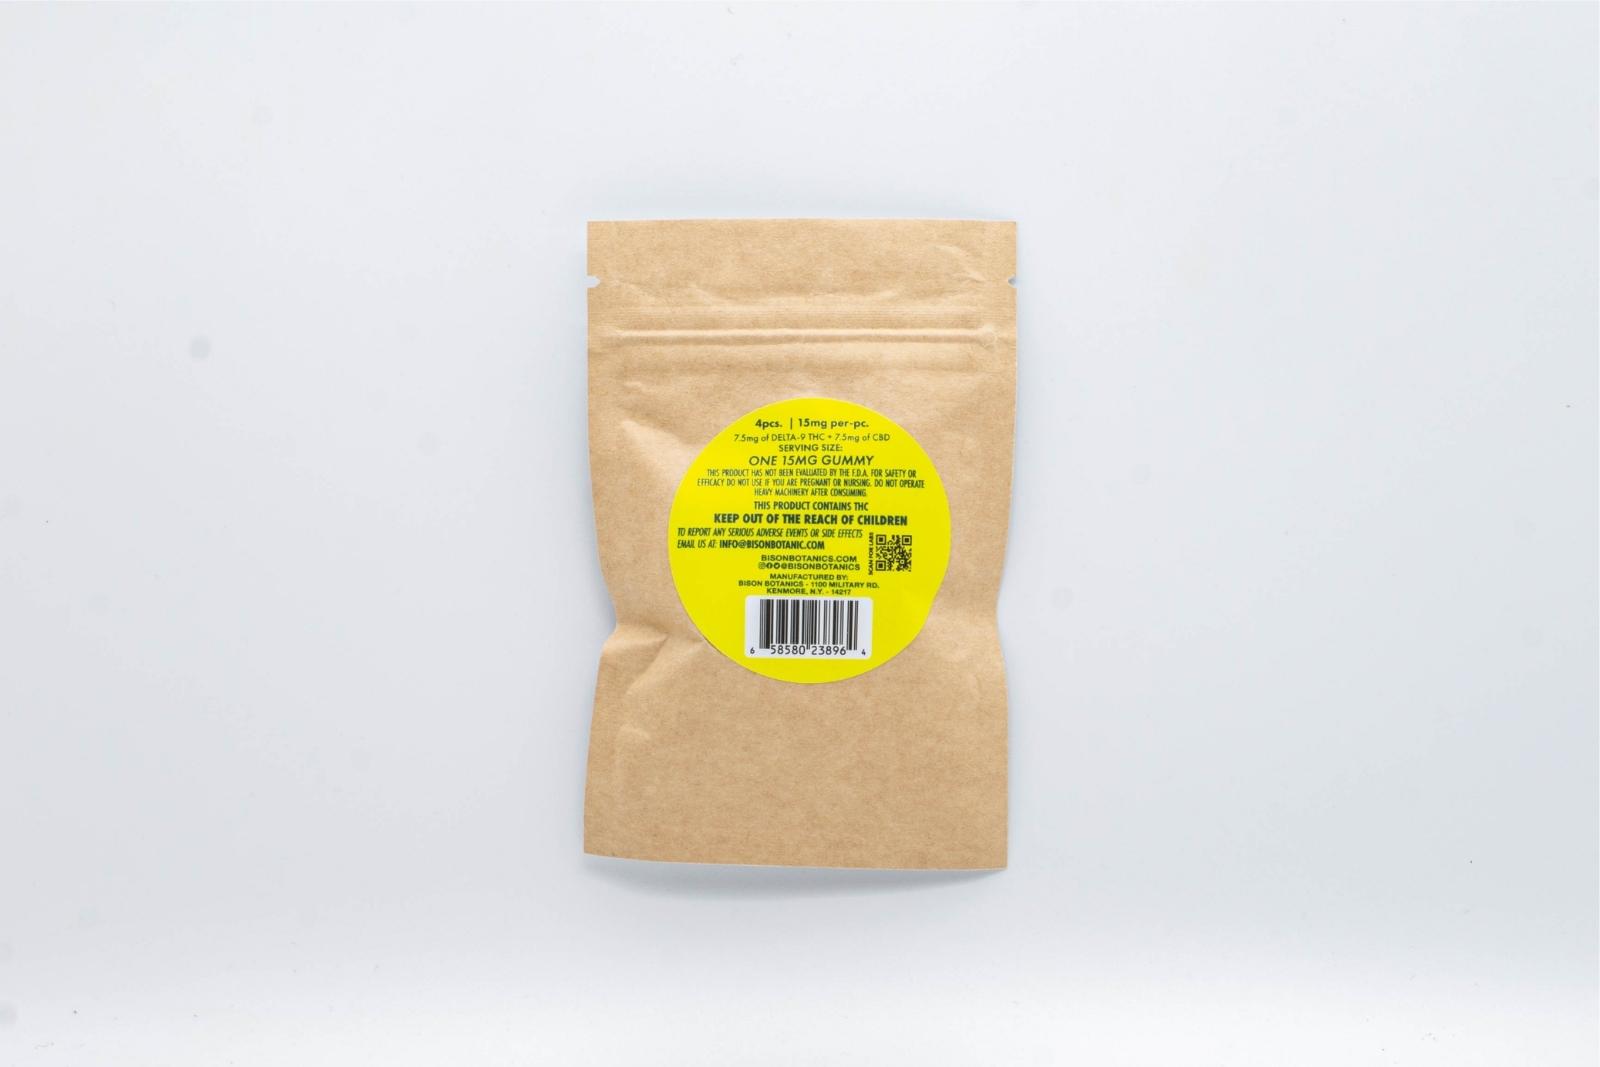 bag of 1:1 Delta-9 THC gummies by Bison Botanics, on a white background